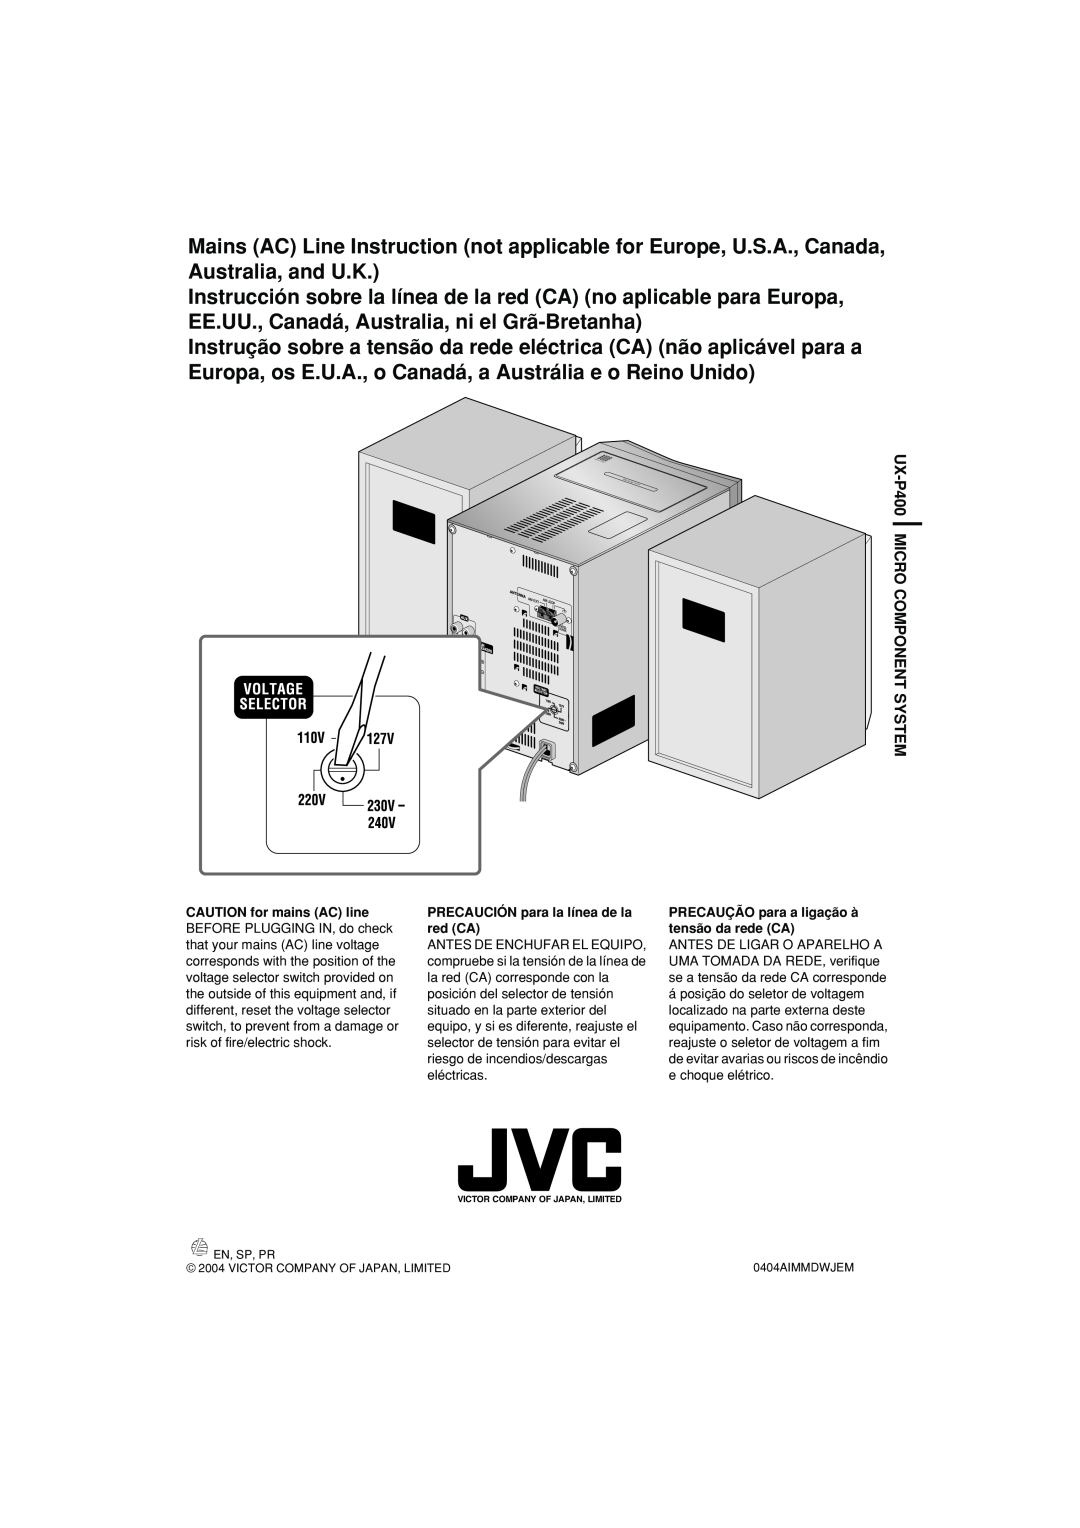 JVC manual UX-P400MICRO COMPONENT SYSTEM, CAUTION for mains AC line, PRECAUCIÓN para la línea de la red CA 